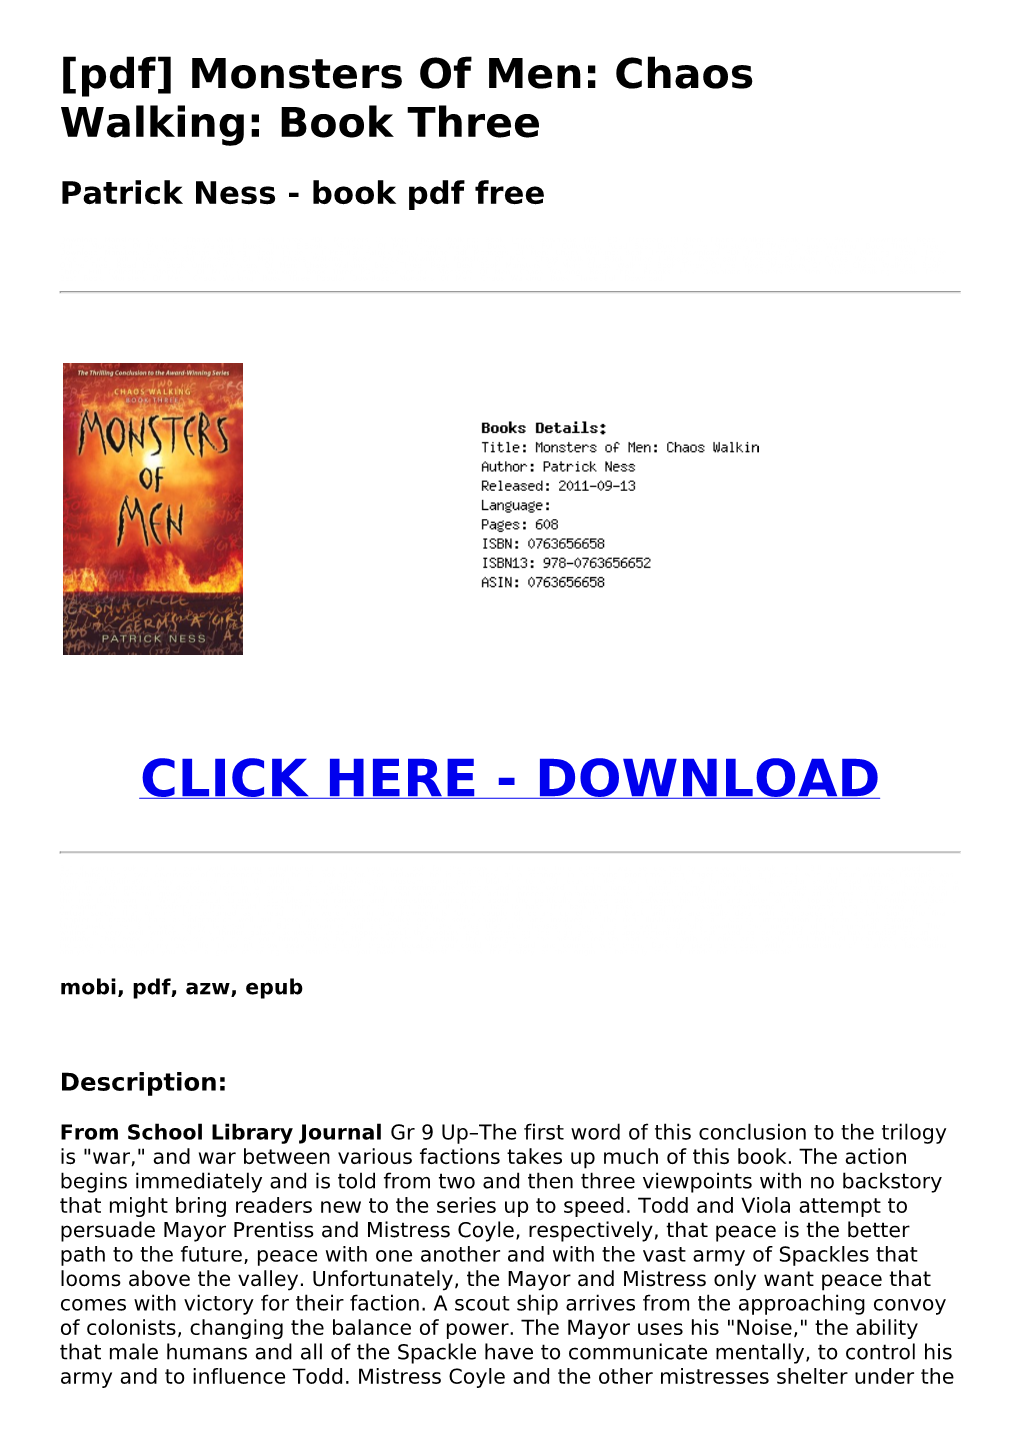 [Pdf] Monsters of Men: Chaos Walking: Book Three Patrick Ness